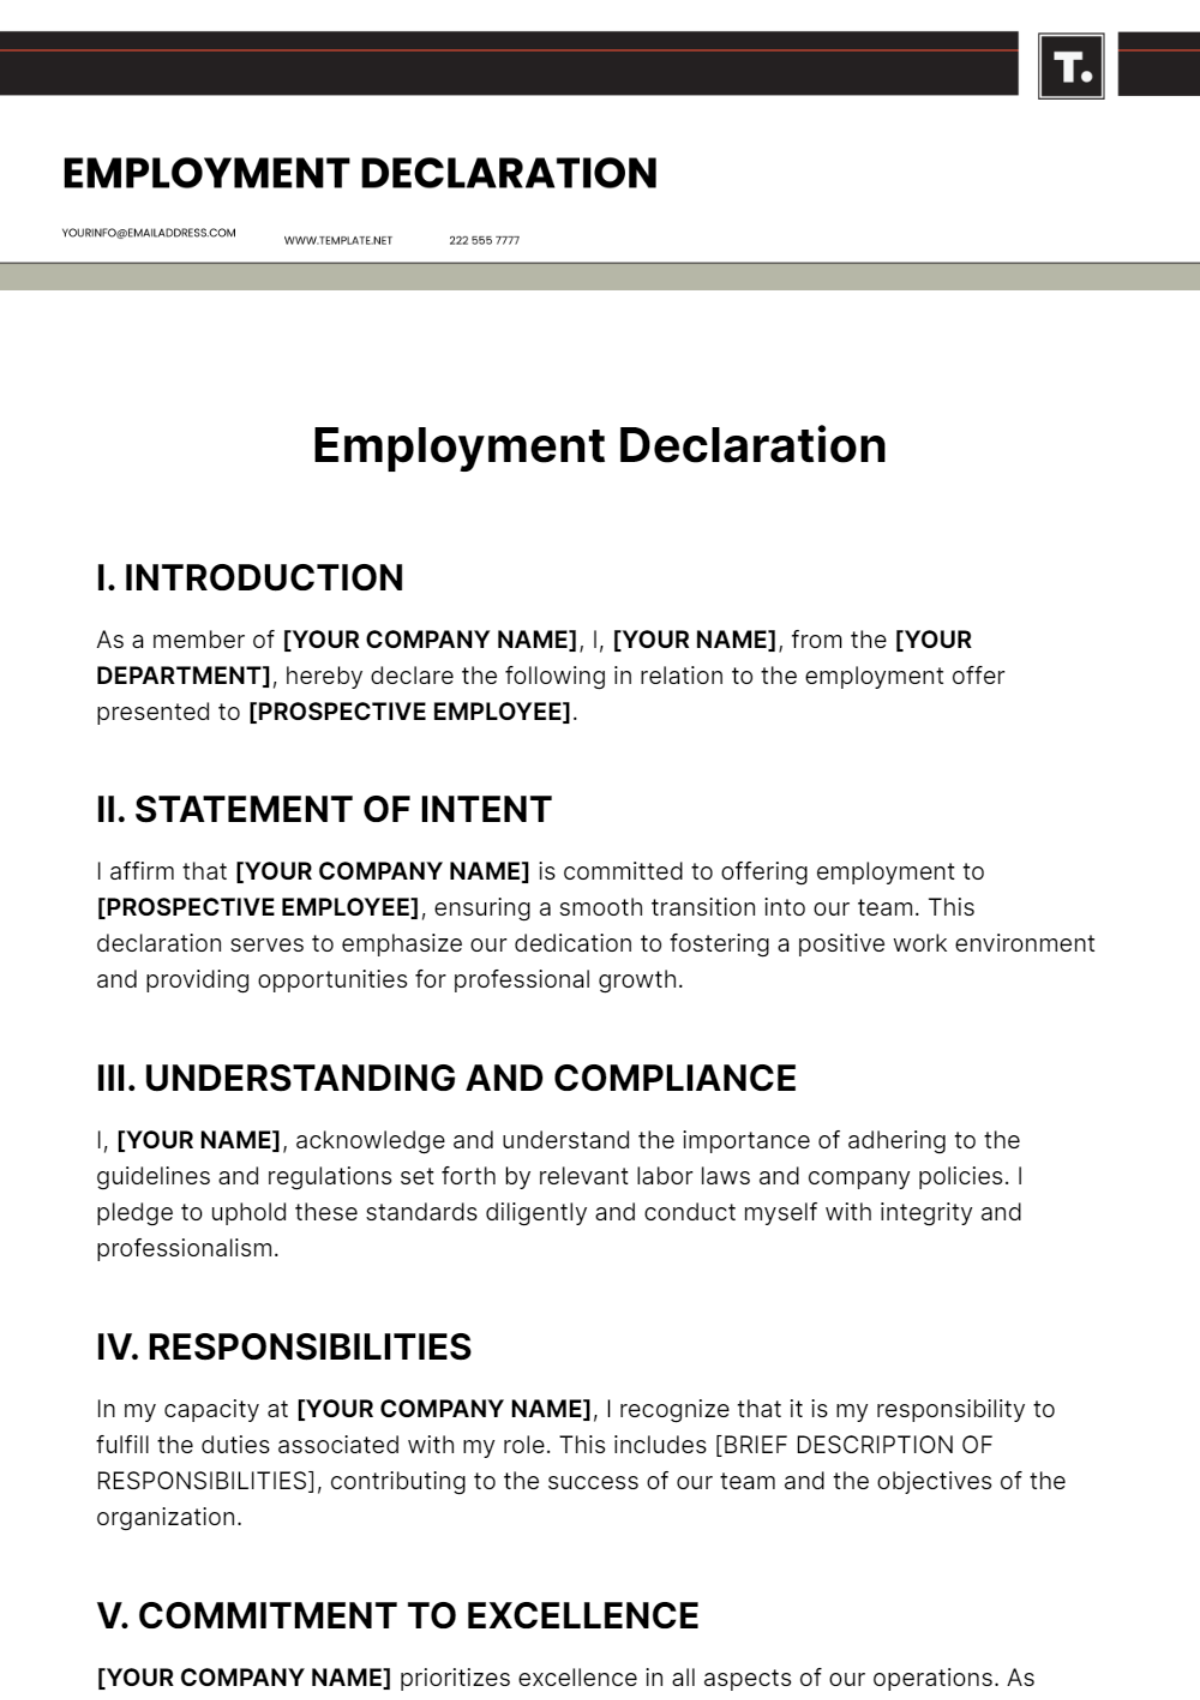 Employment Declaration Template